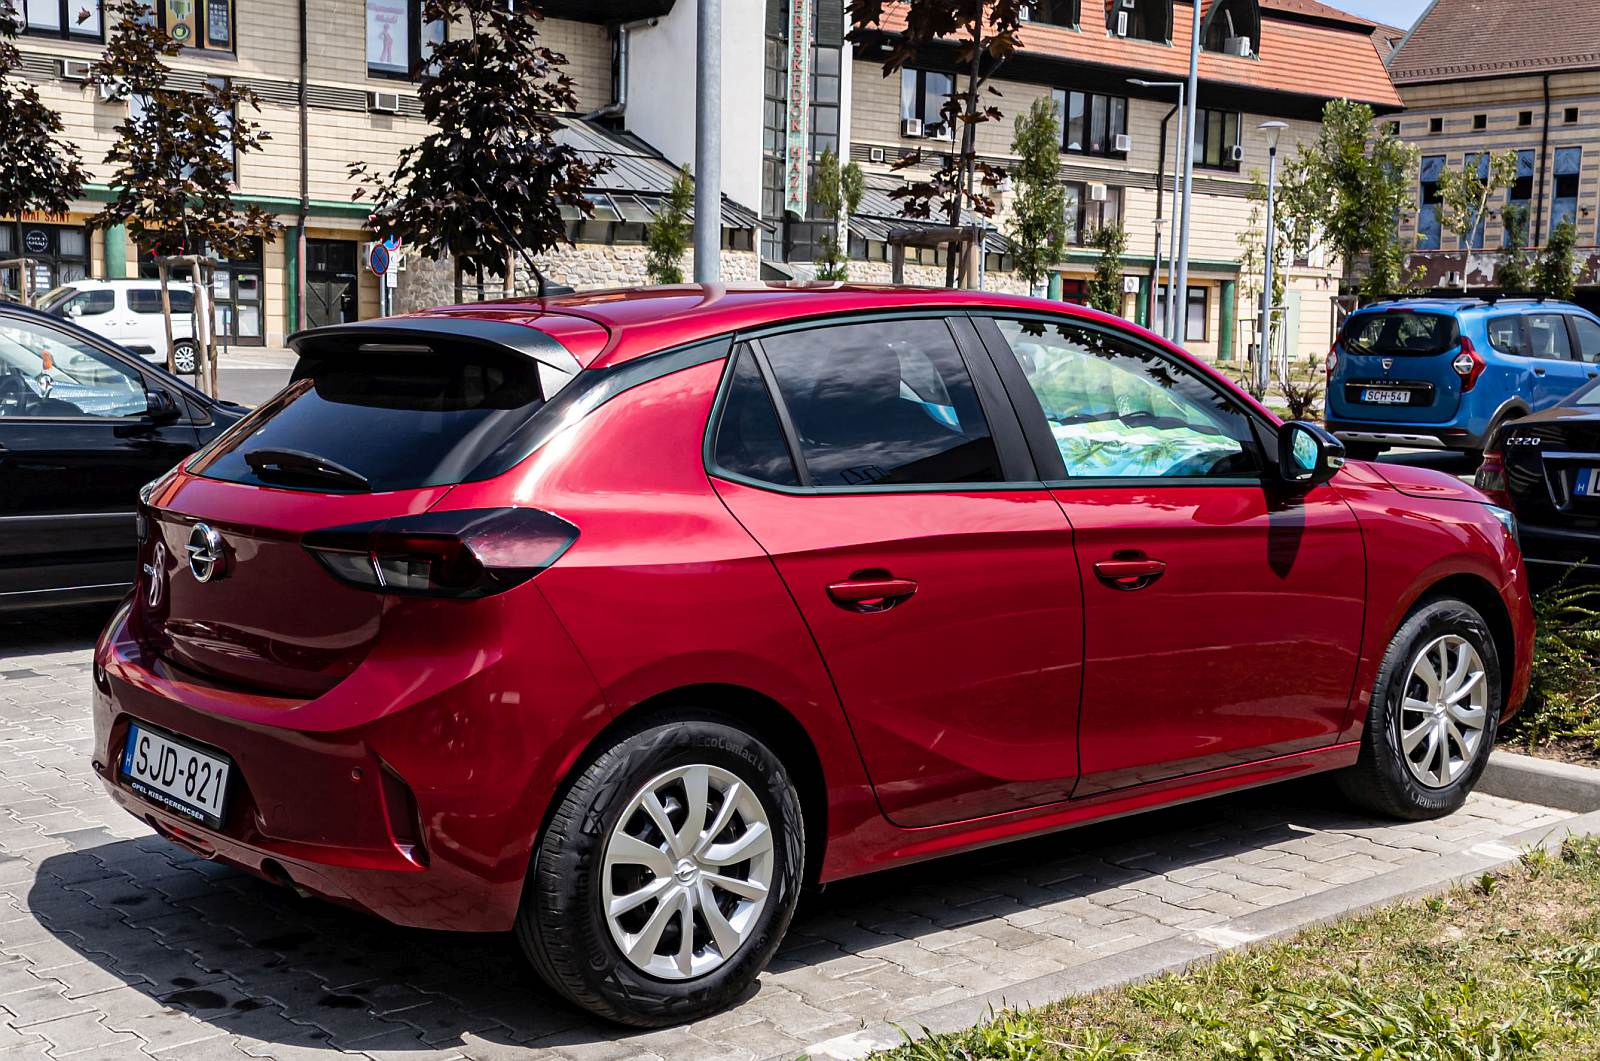 Rückansicht / Seitenansicht: Opel Corsa F in Kardiorot. Foto: Juli, 2022